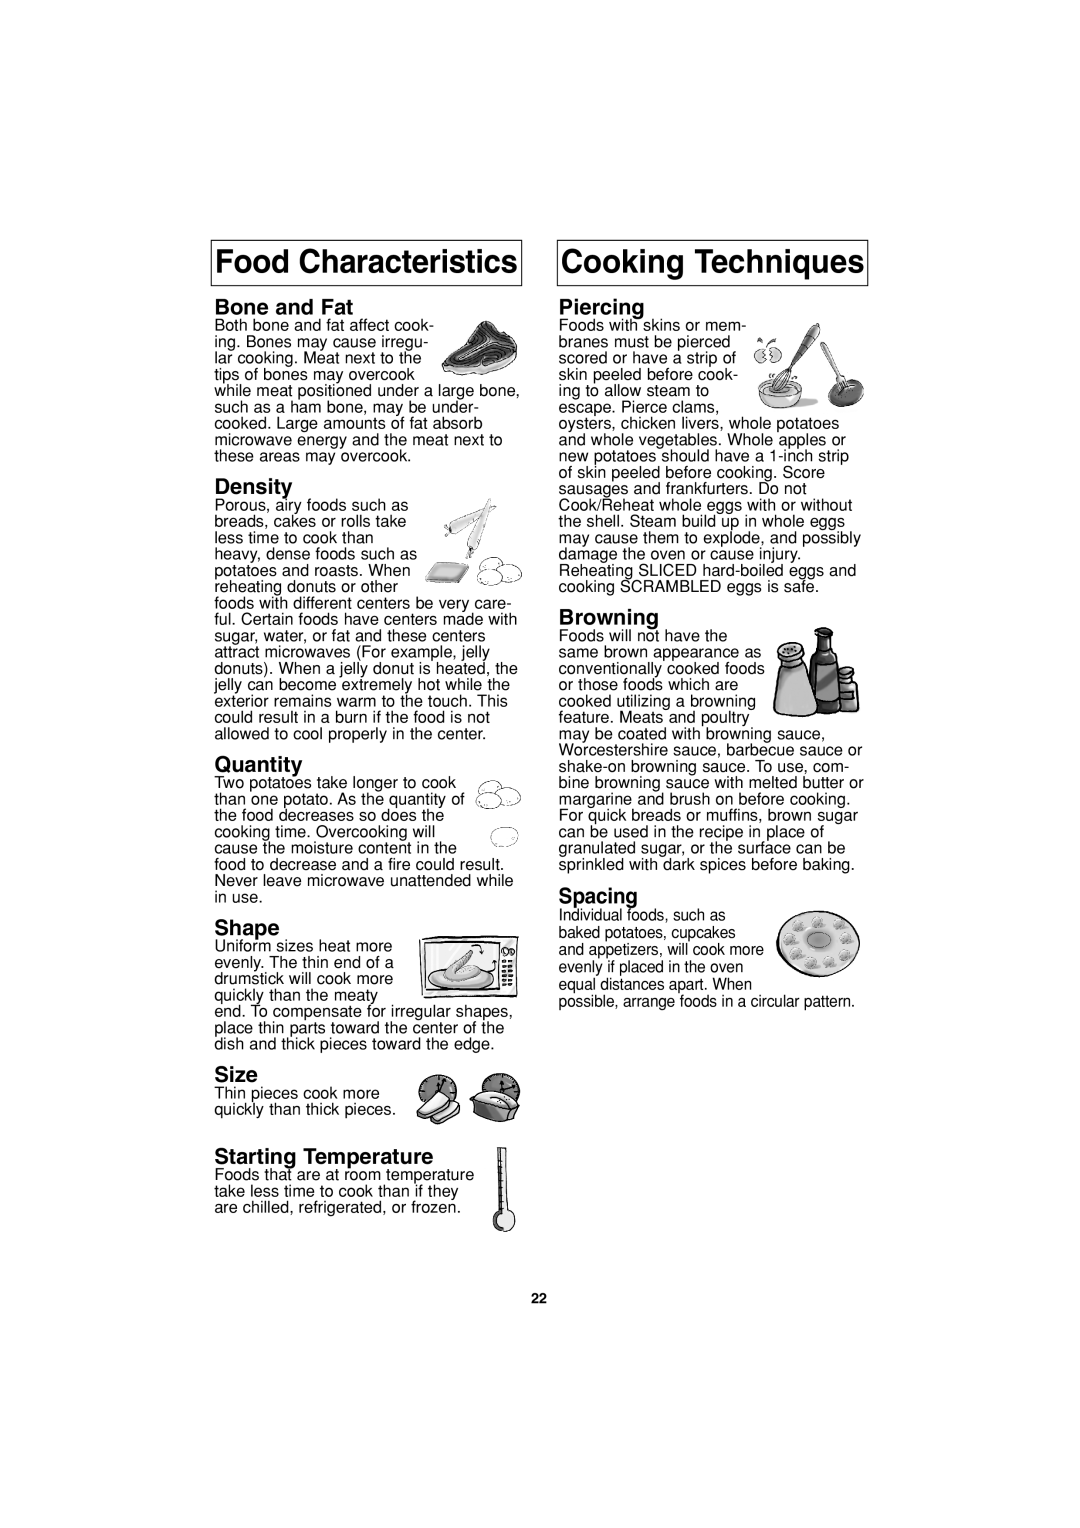 Panasonic NN-S743 Food Characteristics, Cooking Techniques, Bone and Fat, Density, Quantity, Shape, Size, Piercing 